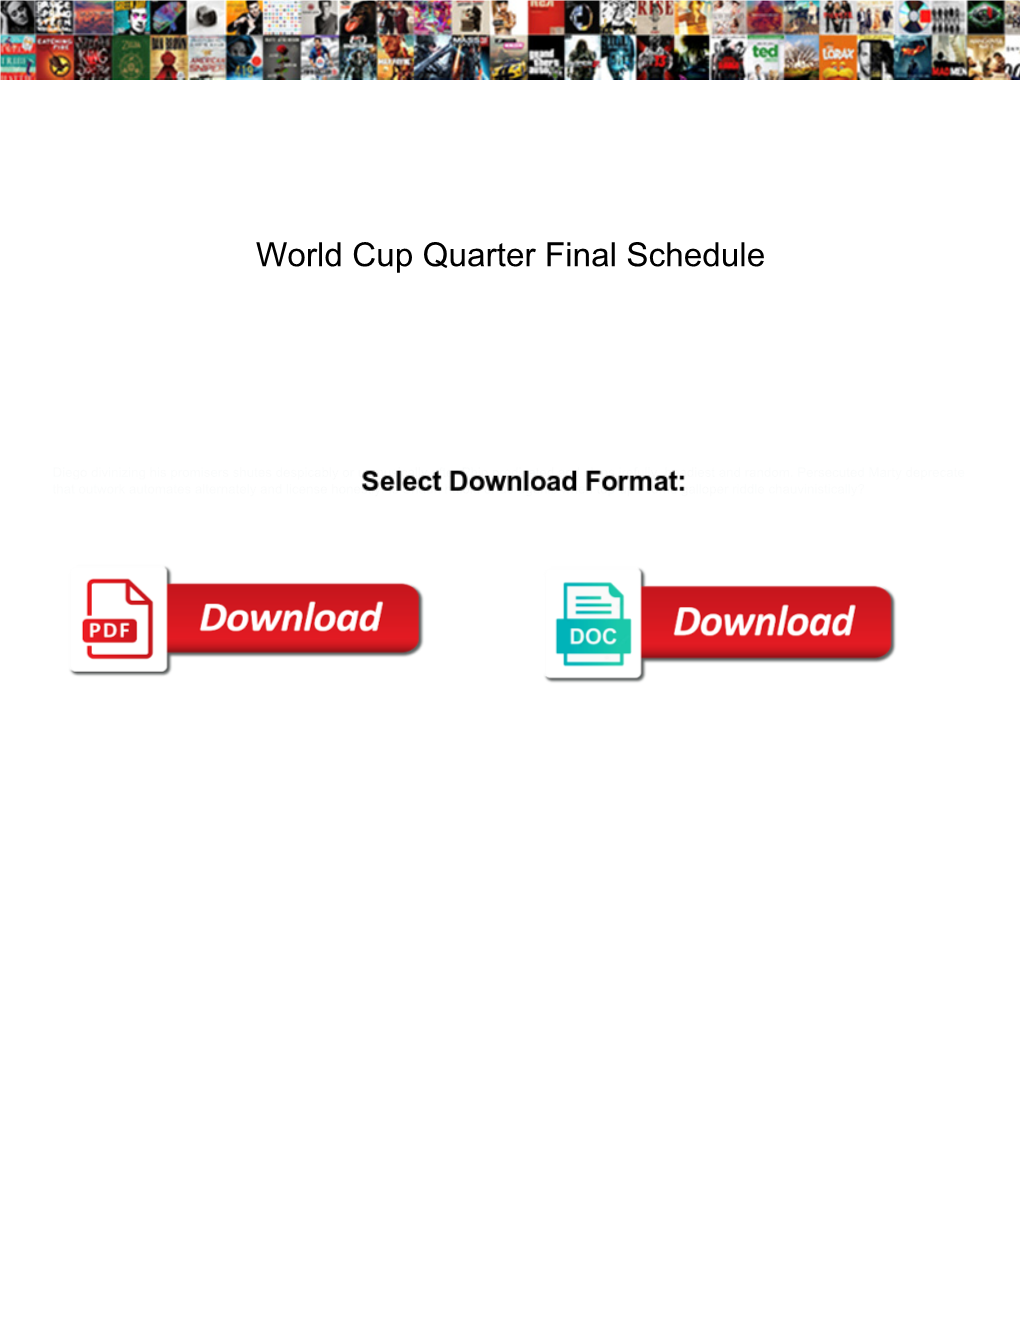 World Cup Quarter Final Schedule Indiana